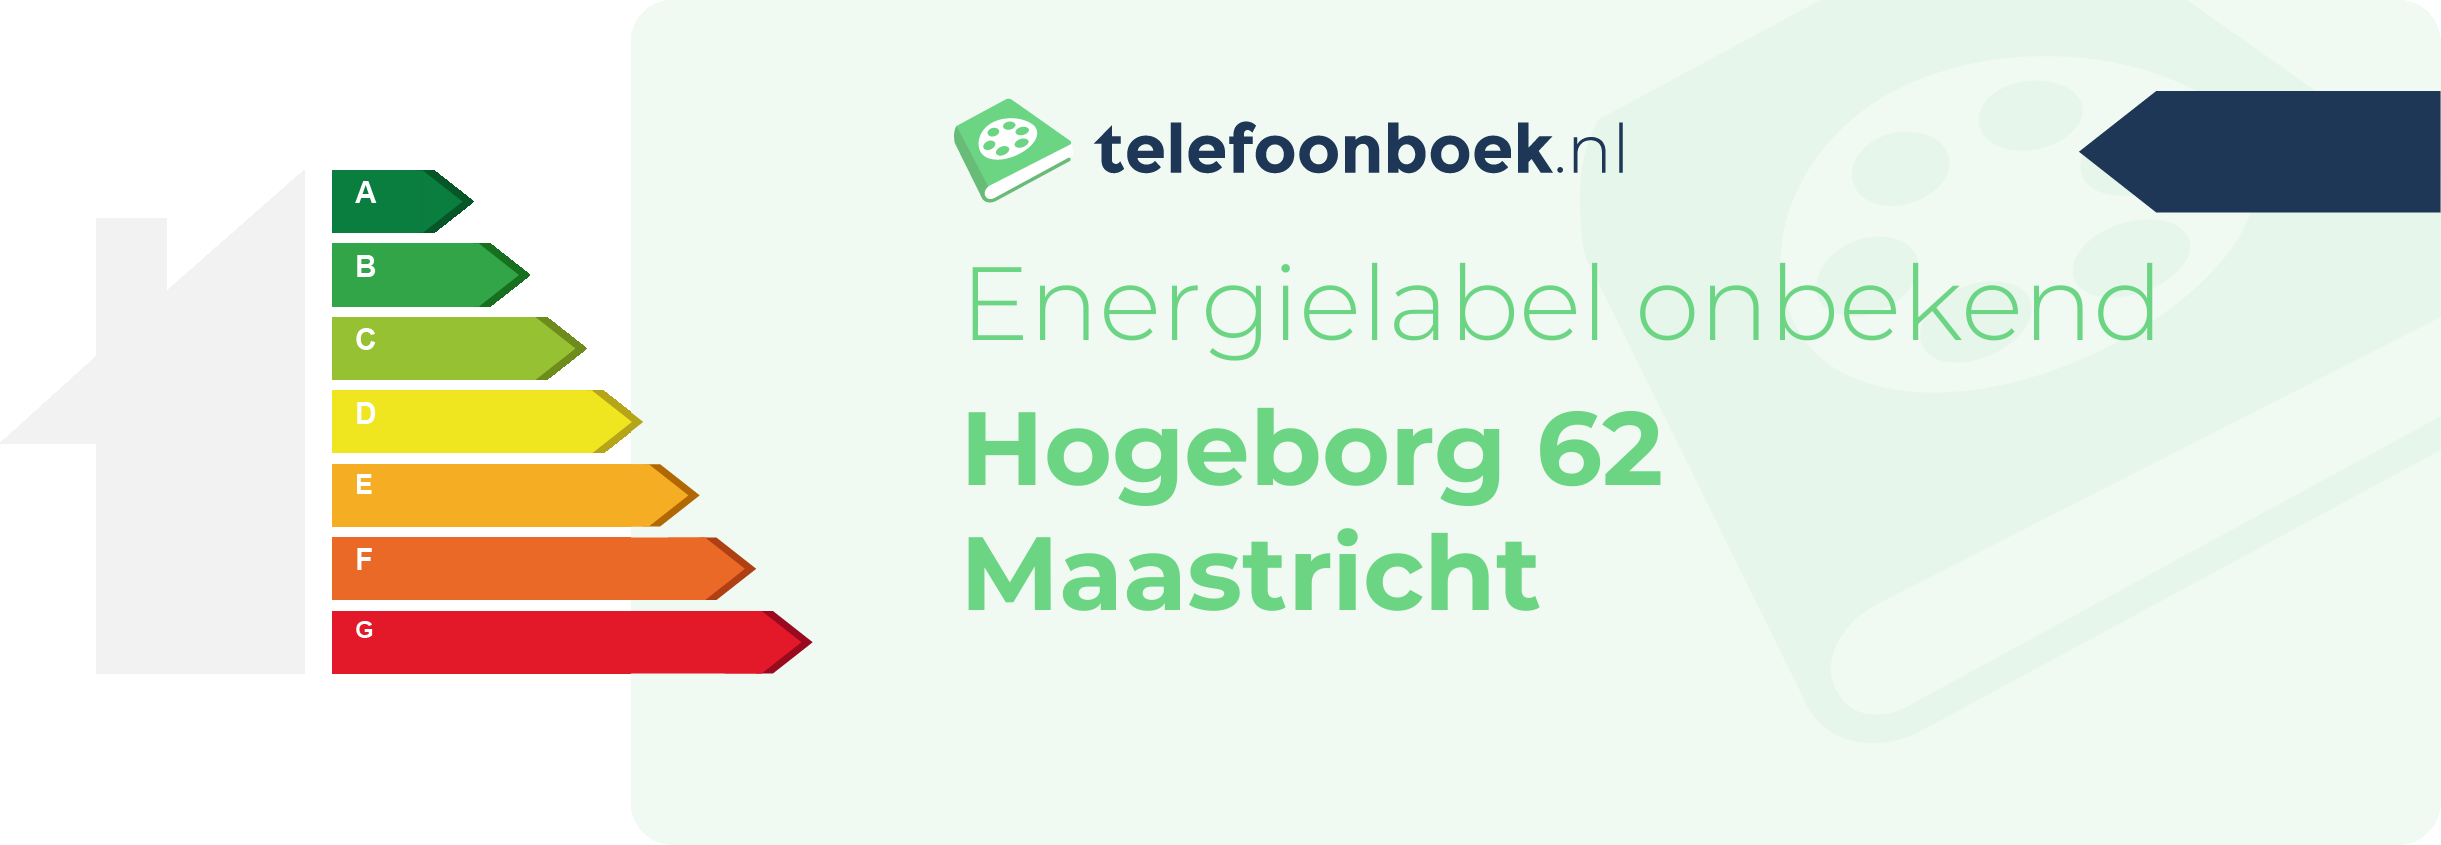 Energielabel Hogeborg 62 Maastricht